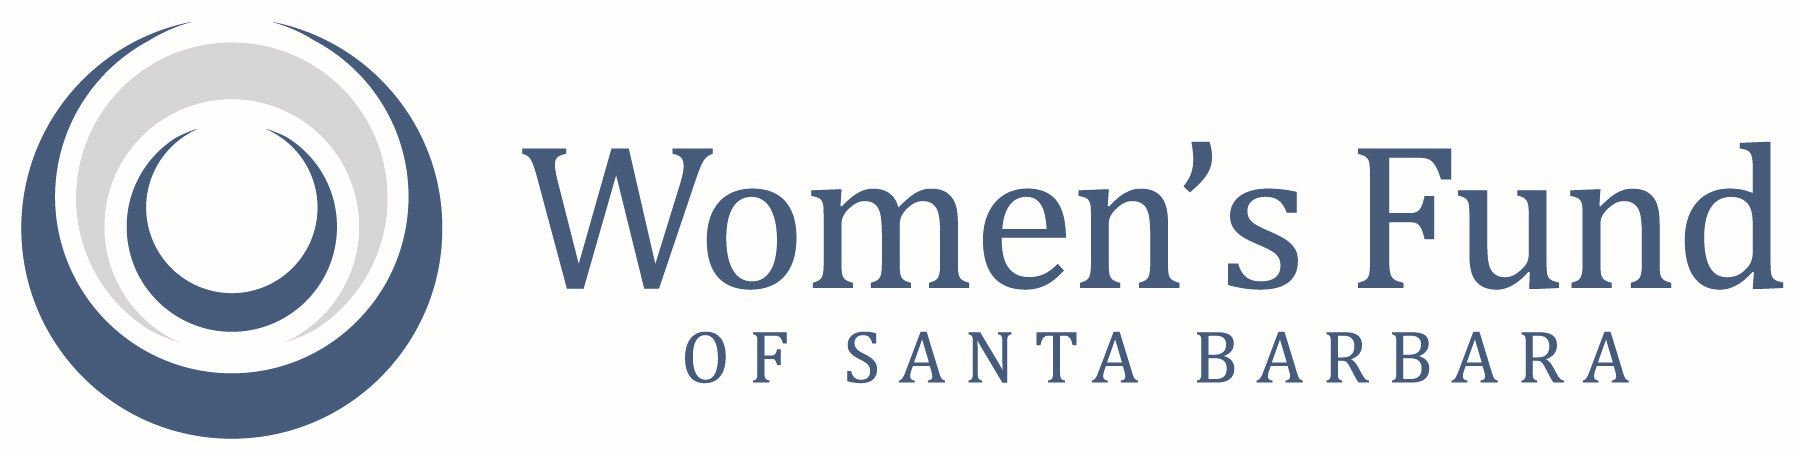 Women's Fund of Santa Barbara